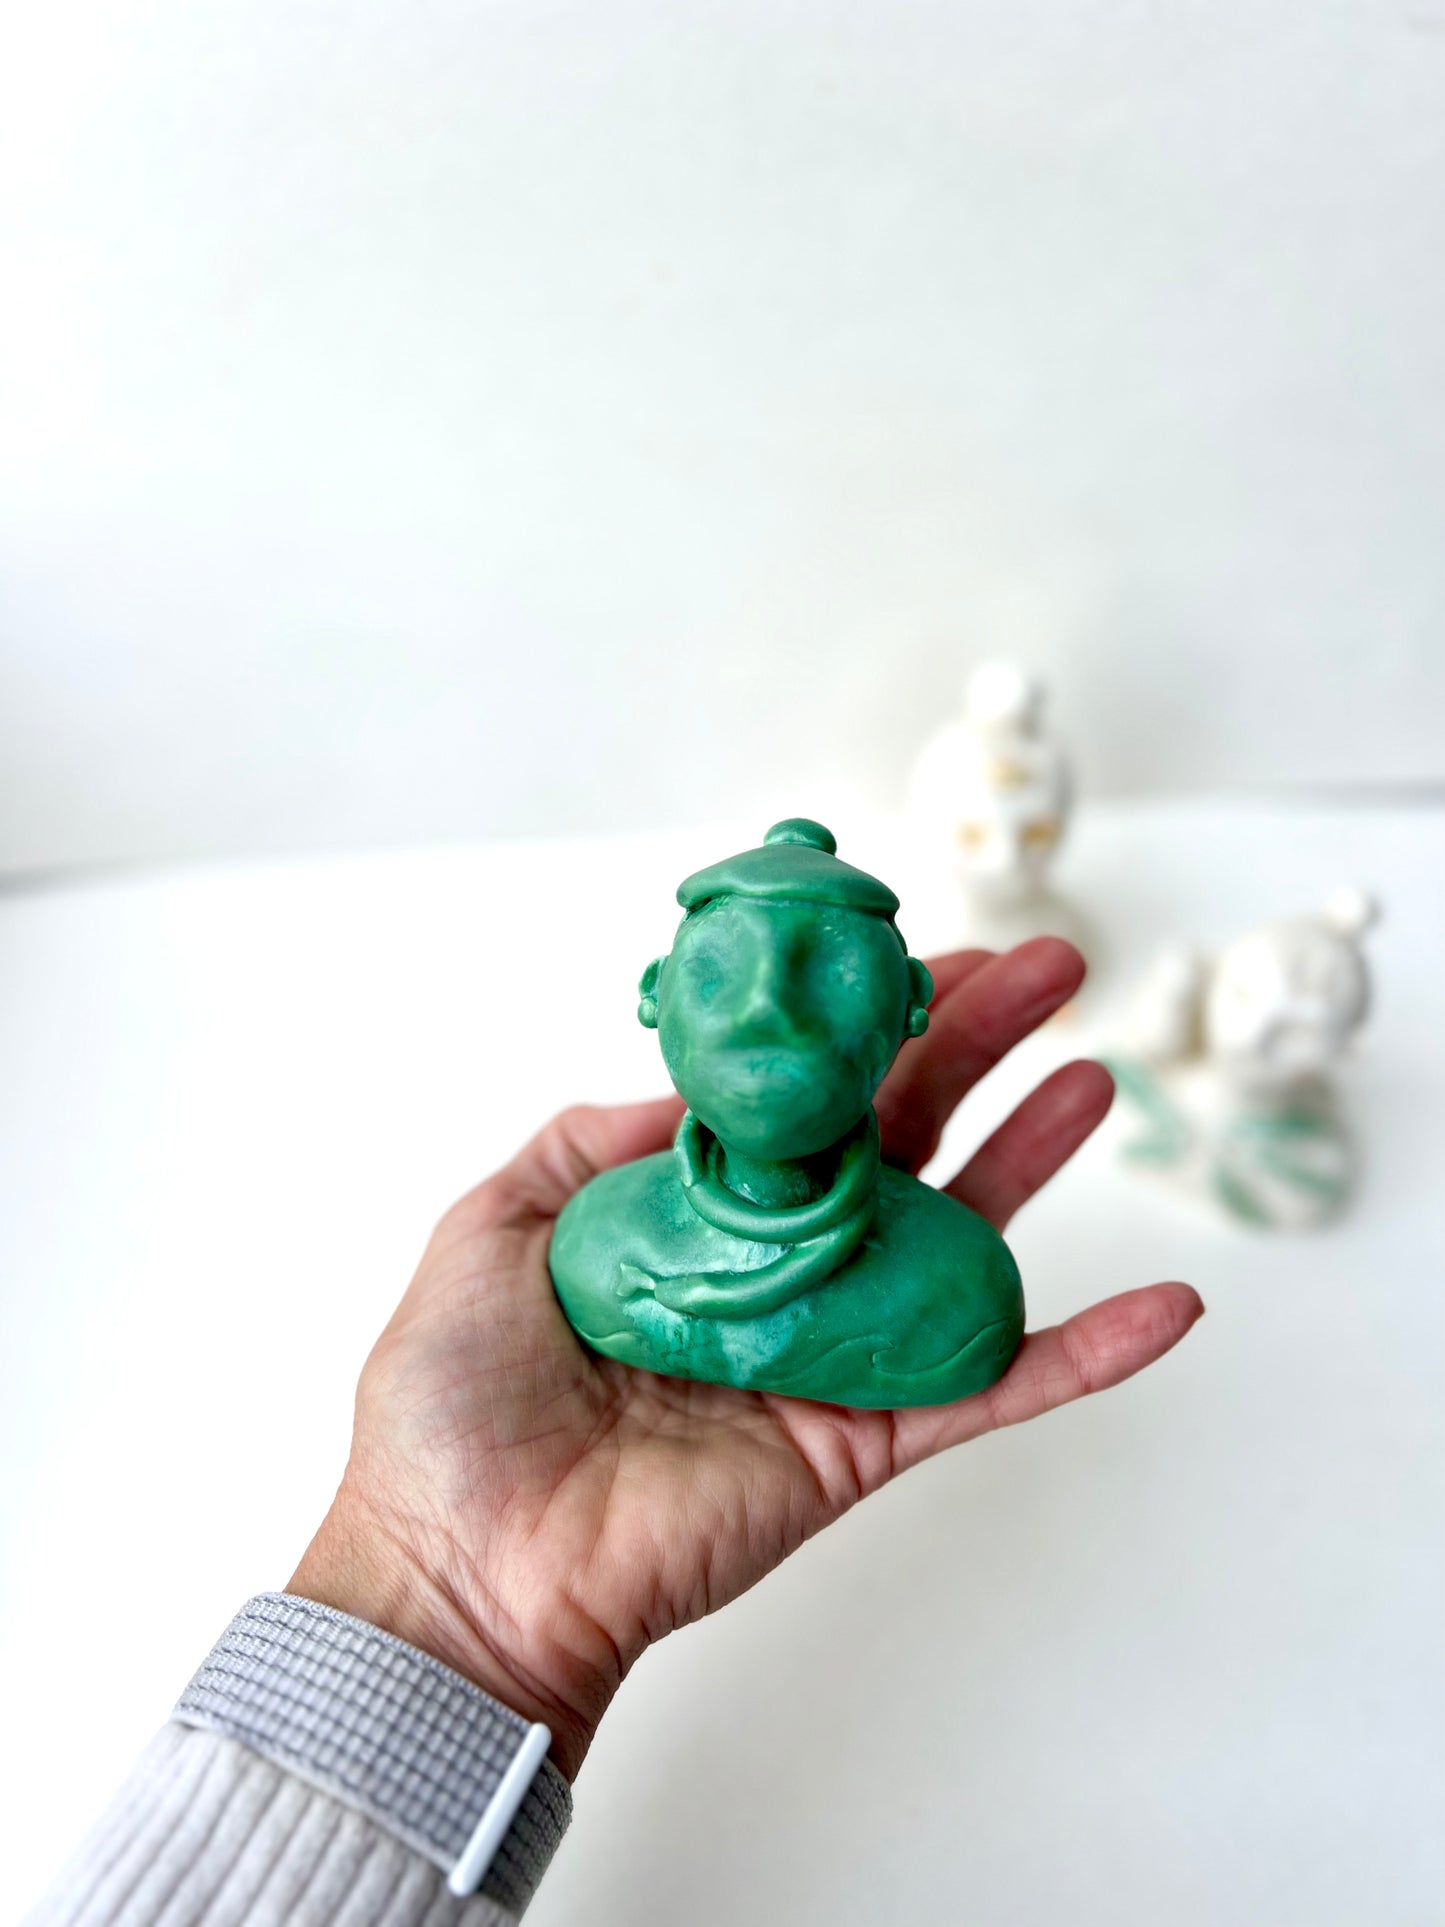 green beret snake figure samples/seconds/sale sculpture